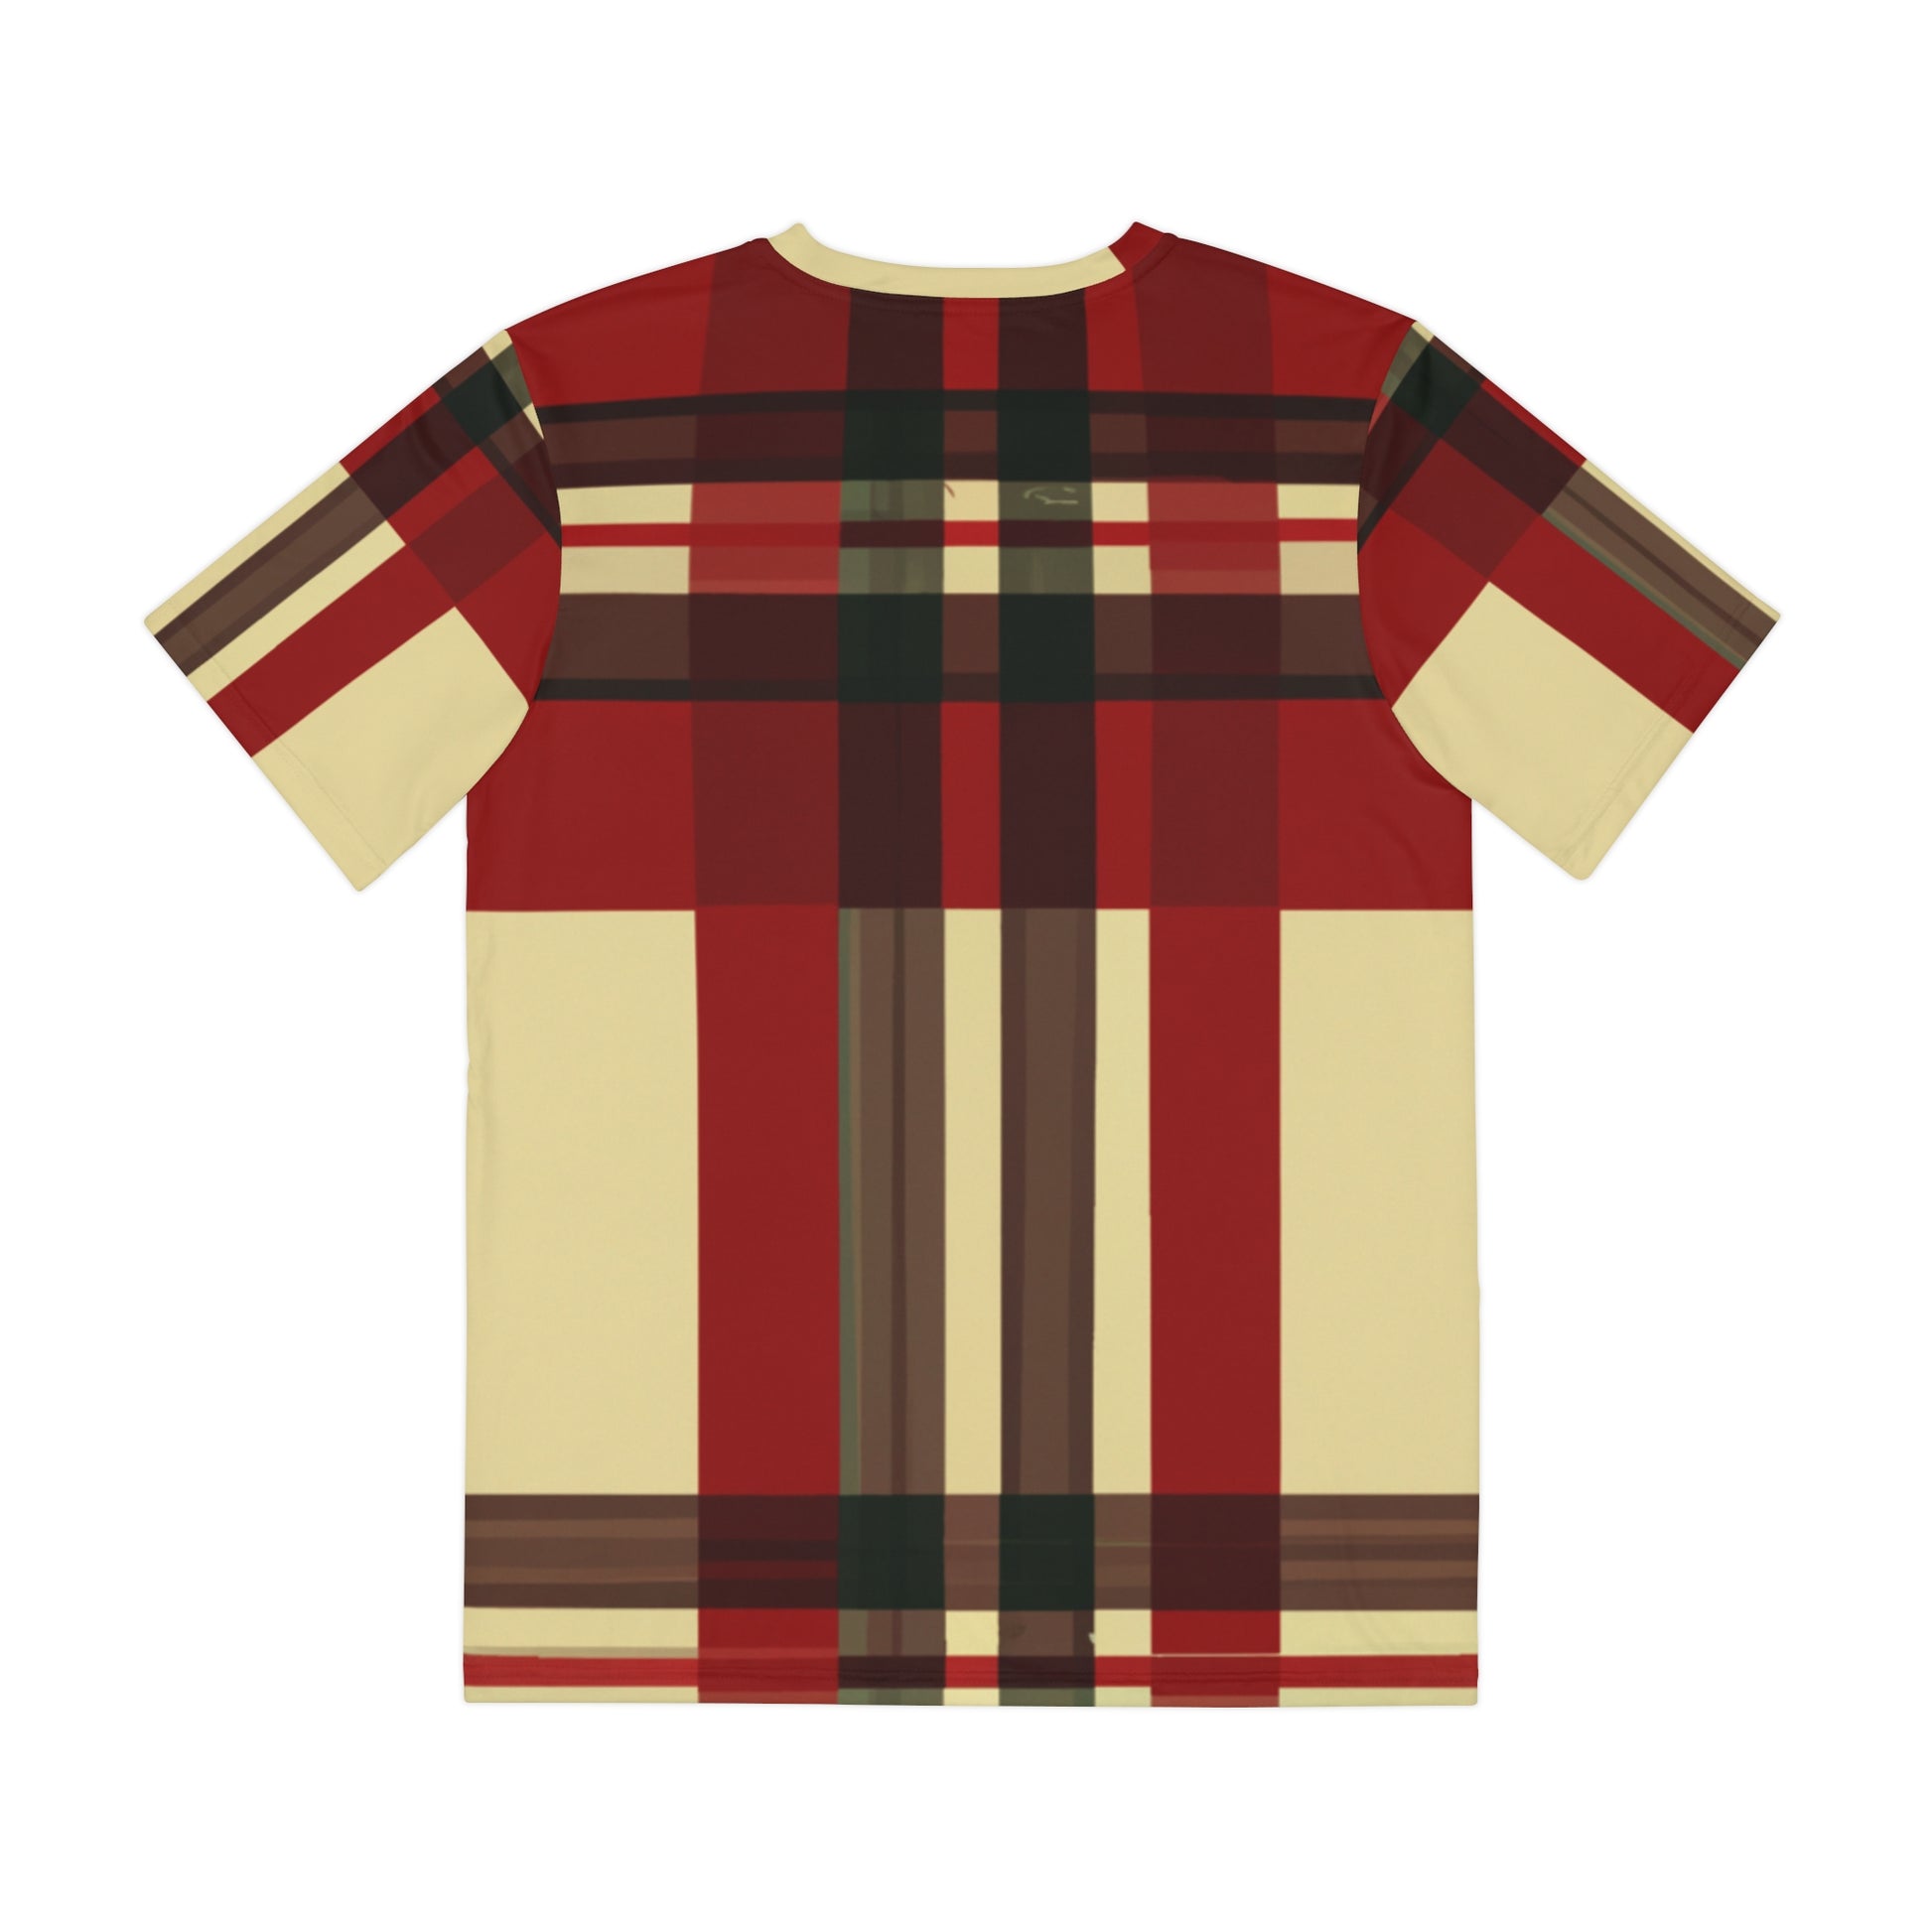 Back view of the Highland Ember Pixels Crewneck Pullover All-Over Print Short-Sleeved Shirt black red beige plaid pattern 